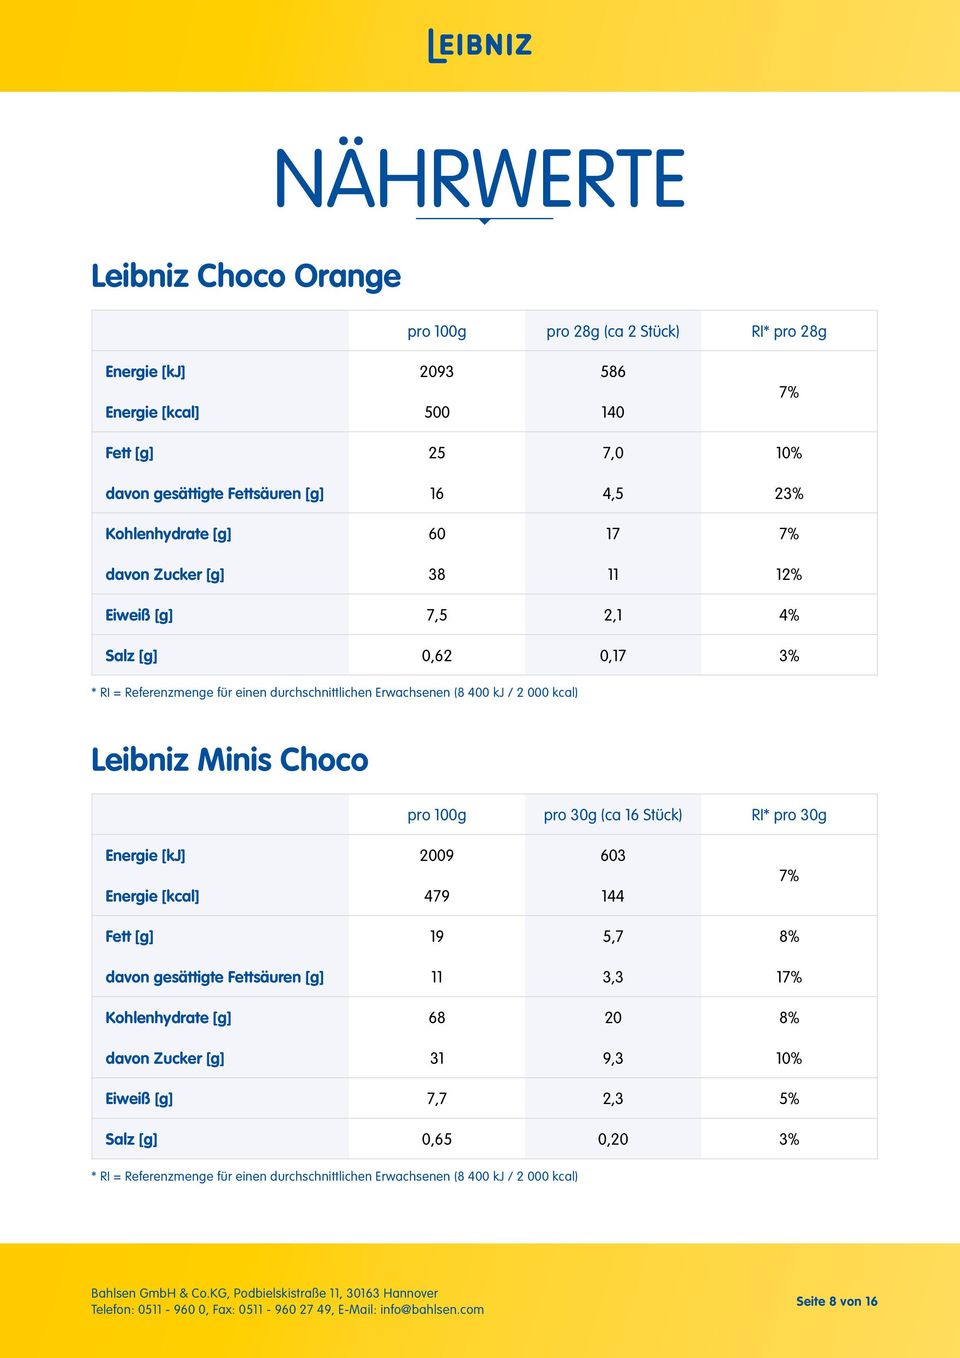 Leibniz Minis Choco pro 100g pro 30g (ca 16 Stück) RI* pro 30g Energie [kj] 2009 603 Energie [kcal] 479 144 Fett [g] 19 5,7 8% davon